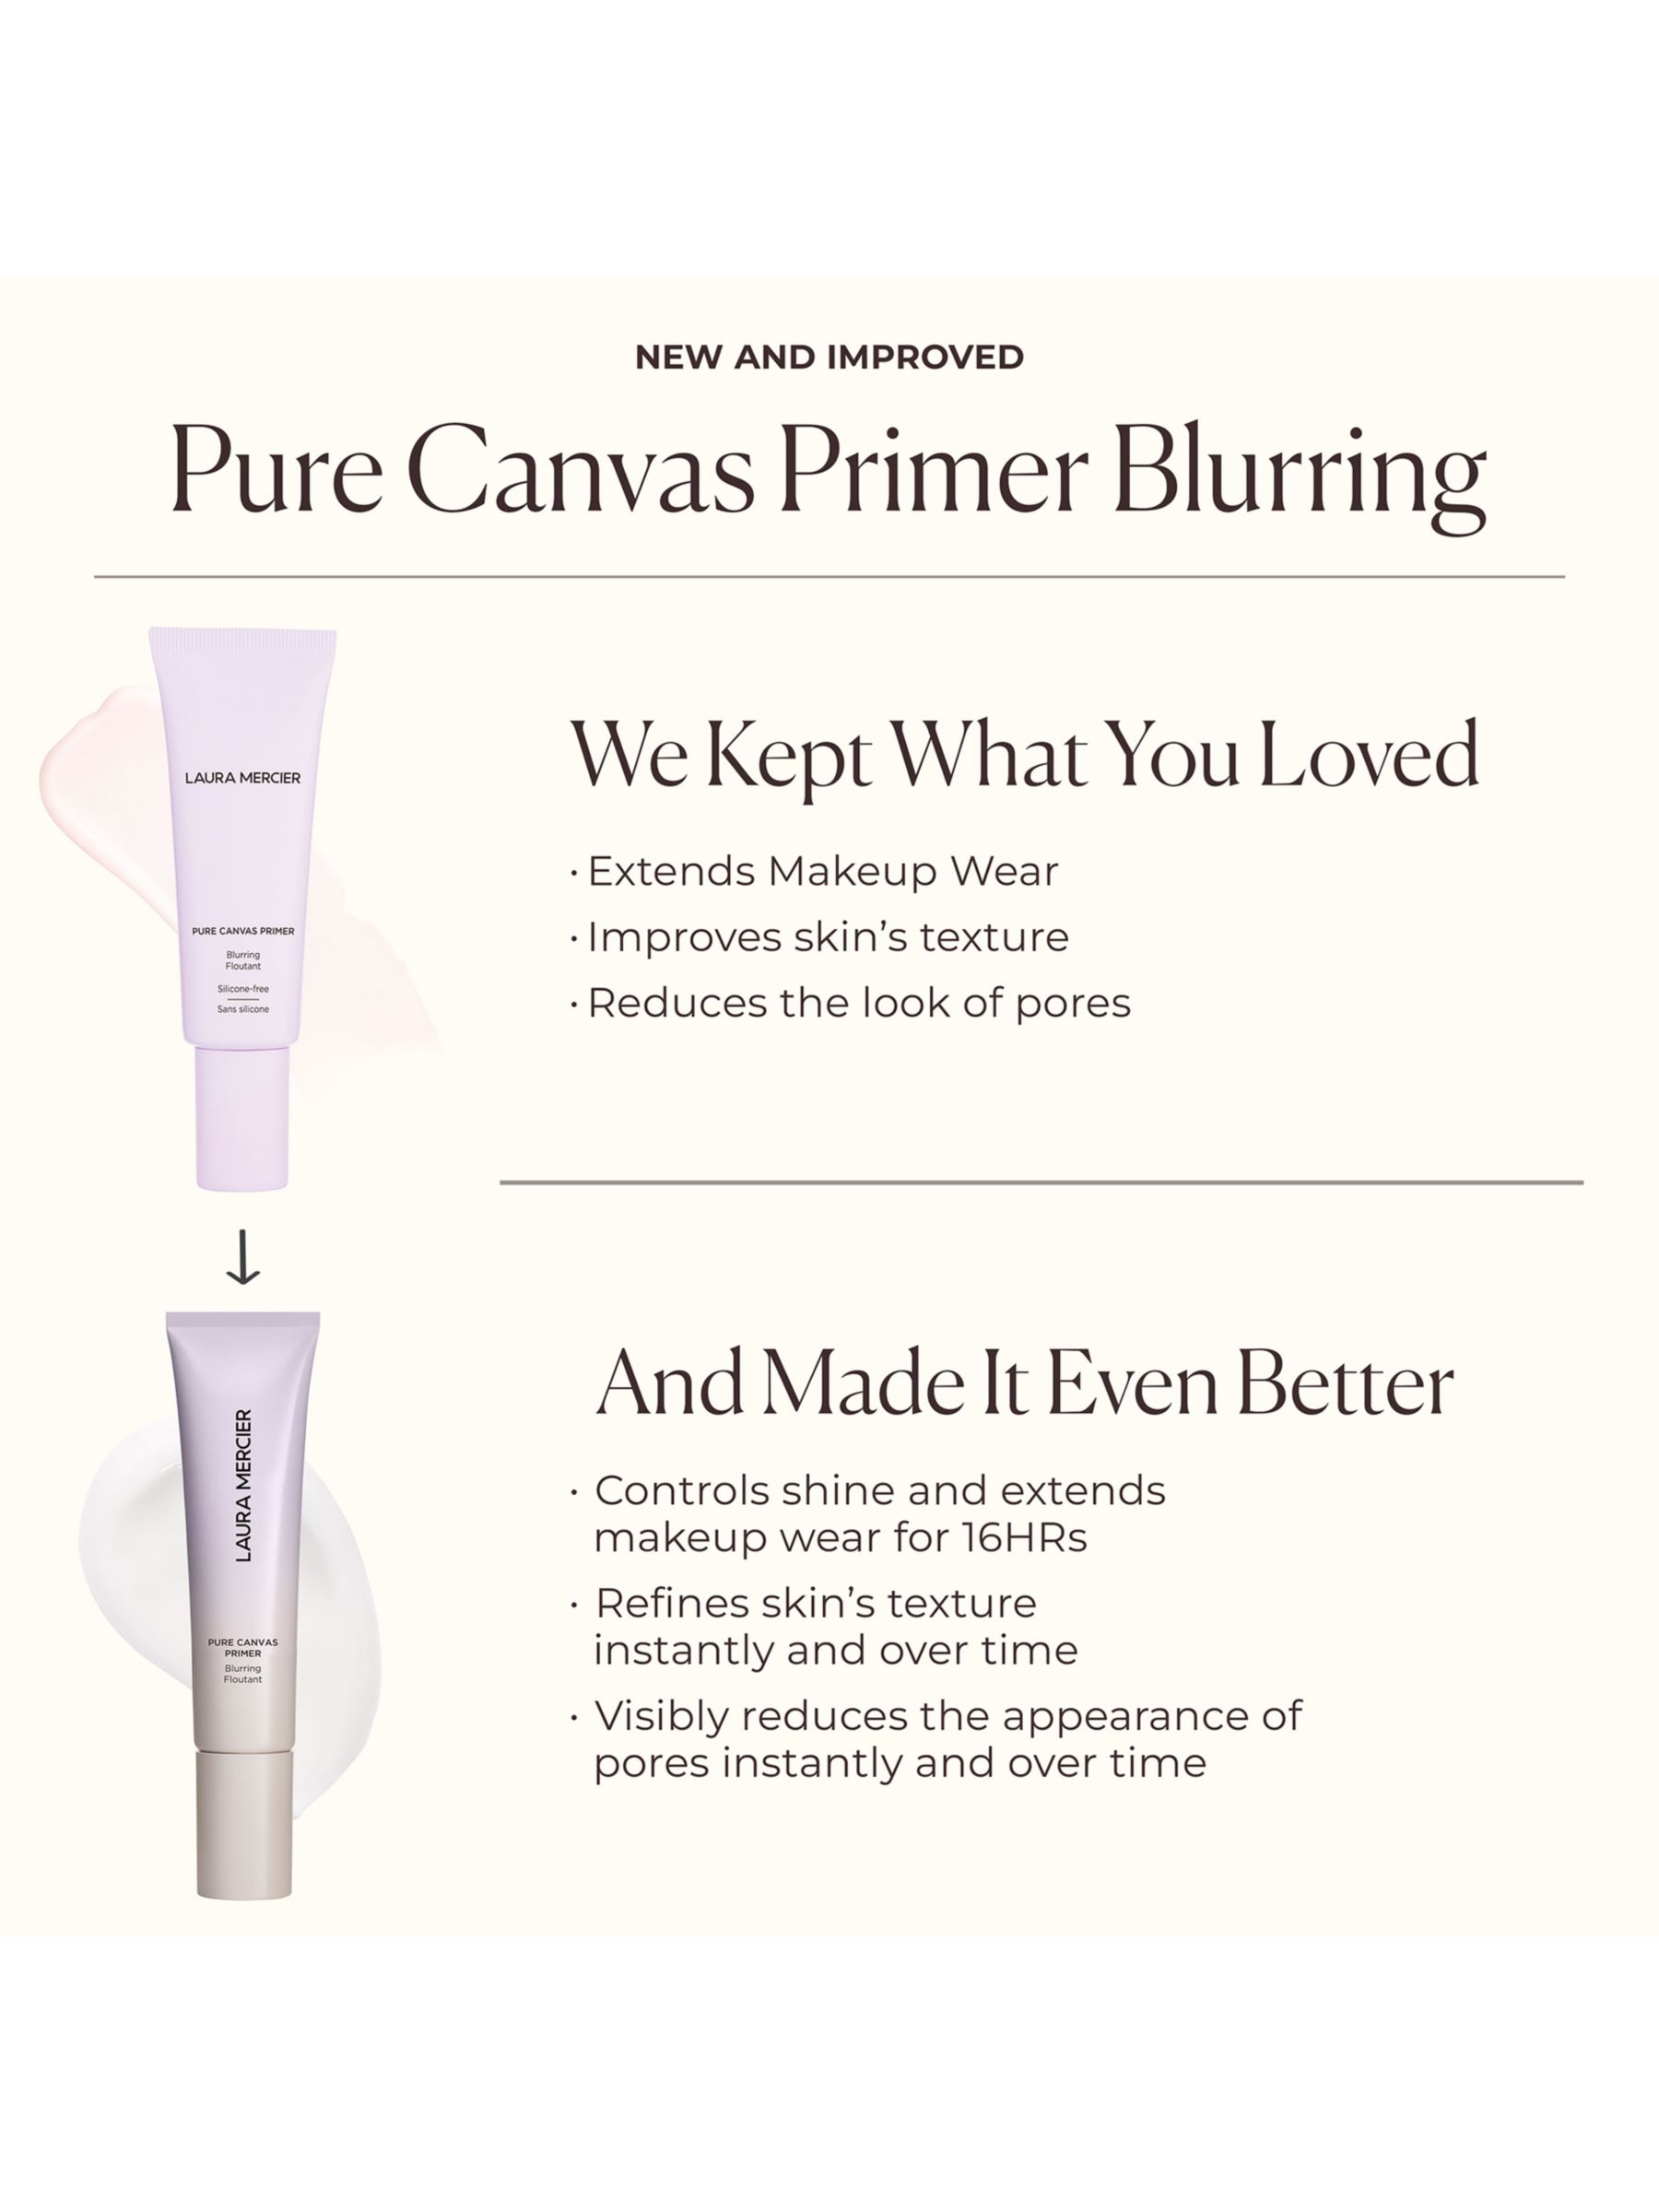 Laura Mercier Pure Canvas Primer Blurring, 15ml